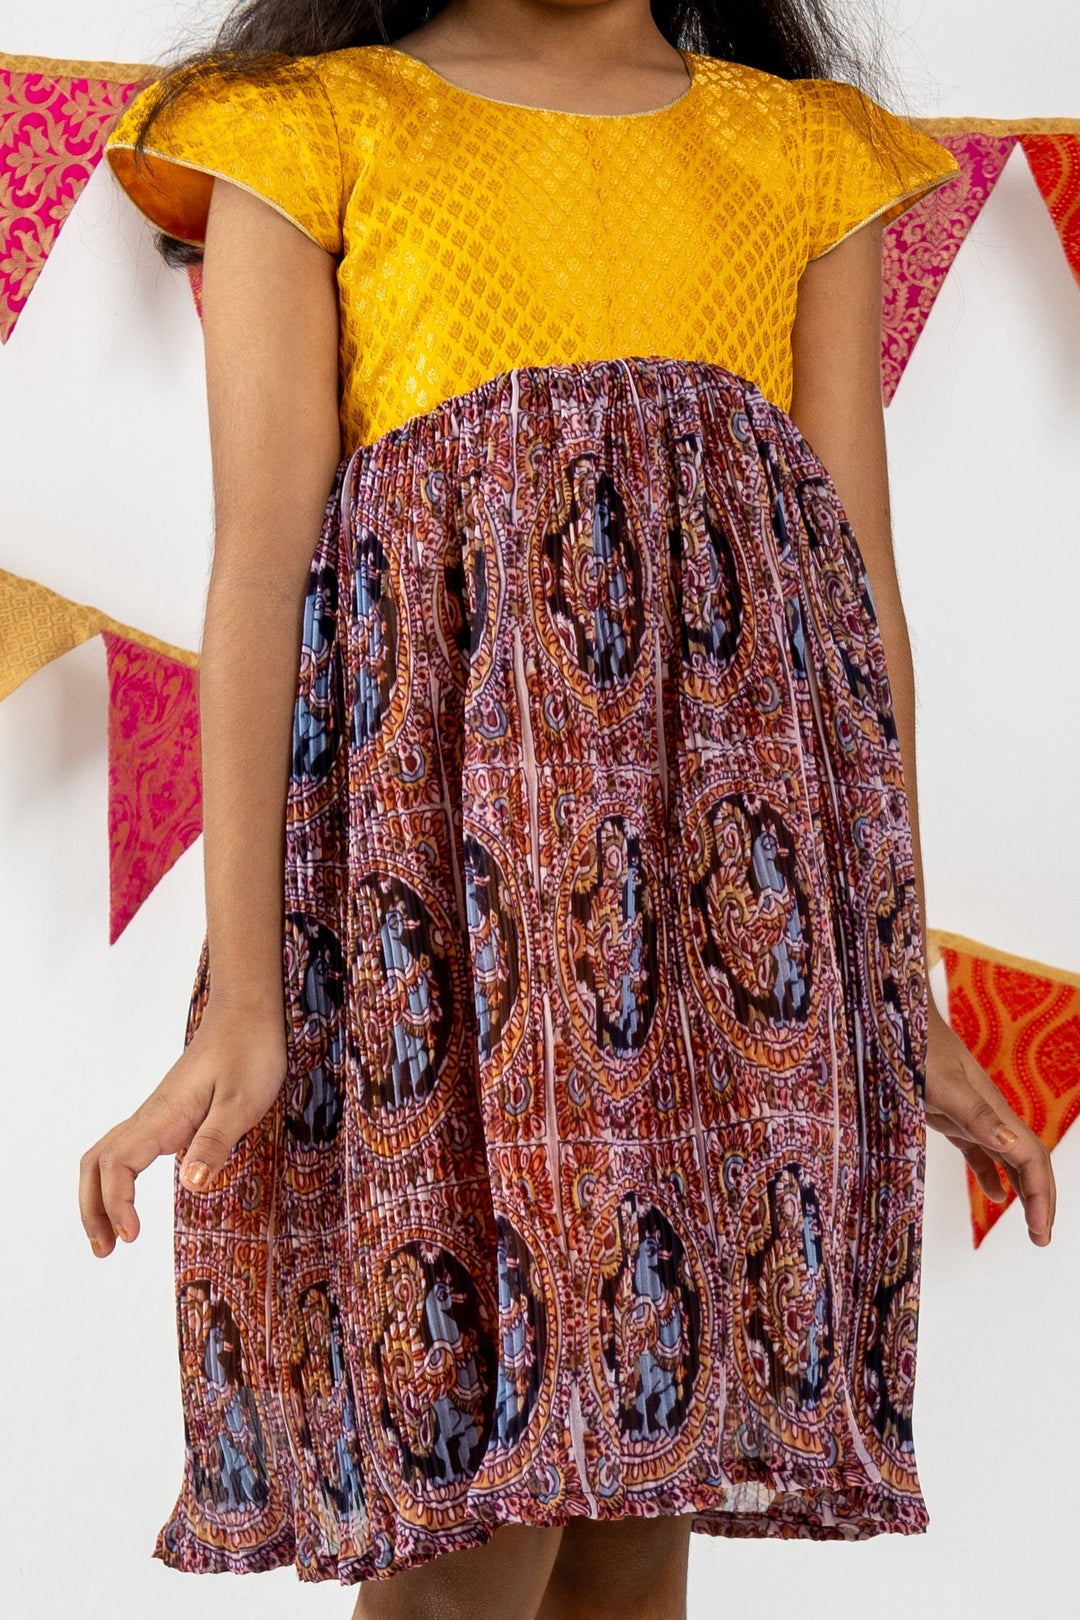 The Nesavu Frocks & Dresses Latest Semi-Crushed Crepe Gown With Contrasting Yellow Yoke For Girls psr silks Nesavu